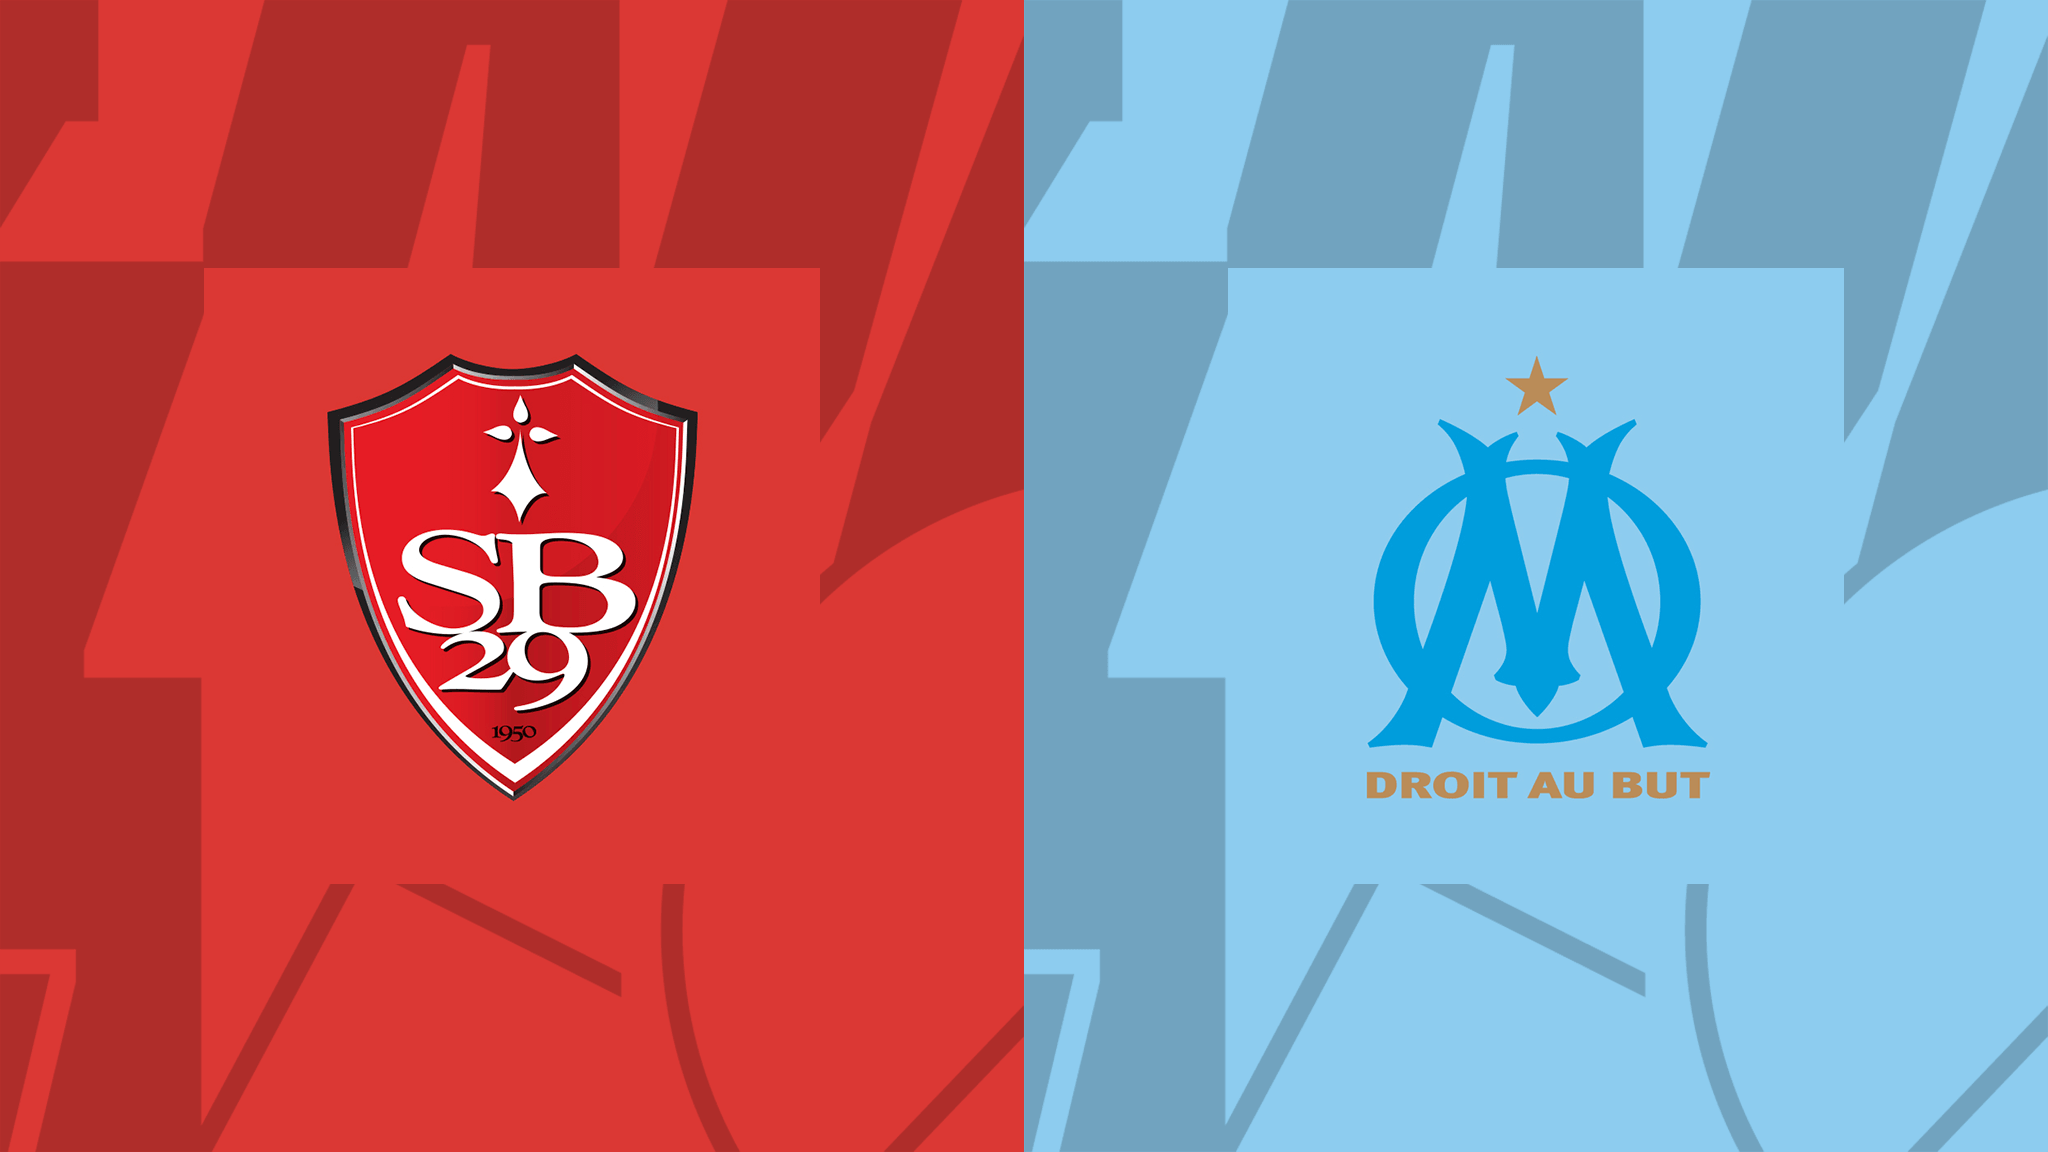  مشاهدة مباراة مارسيليا و ستاد بريست 29 بث مباشر 14/08/2022 Brest vs Olympique Marseille